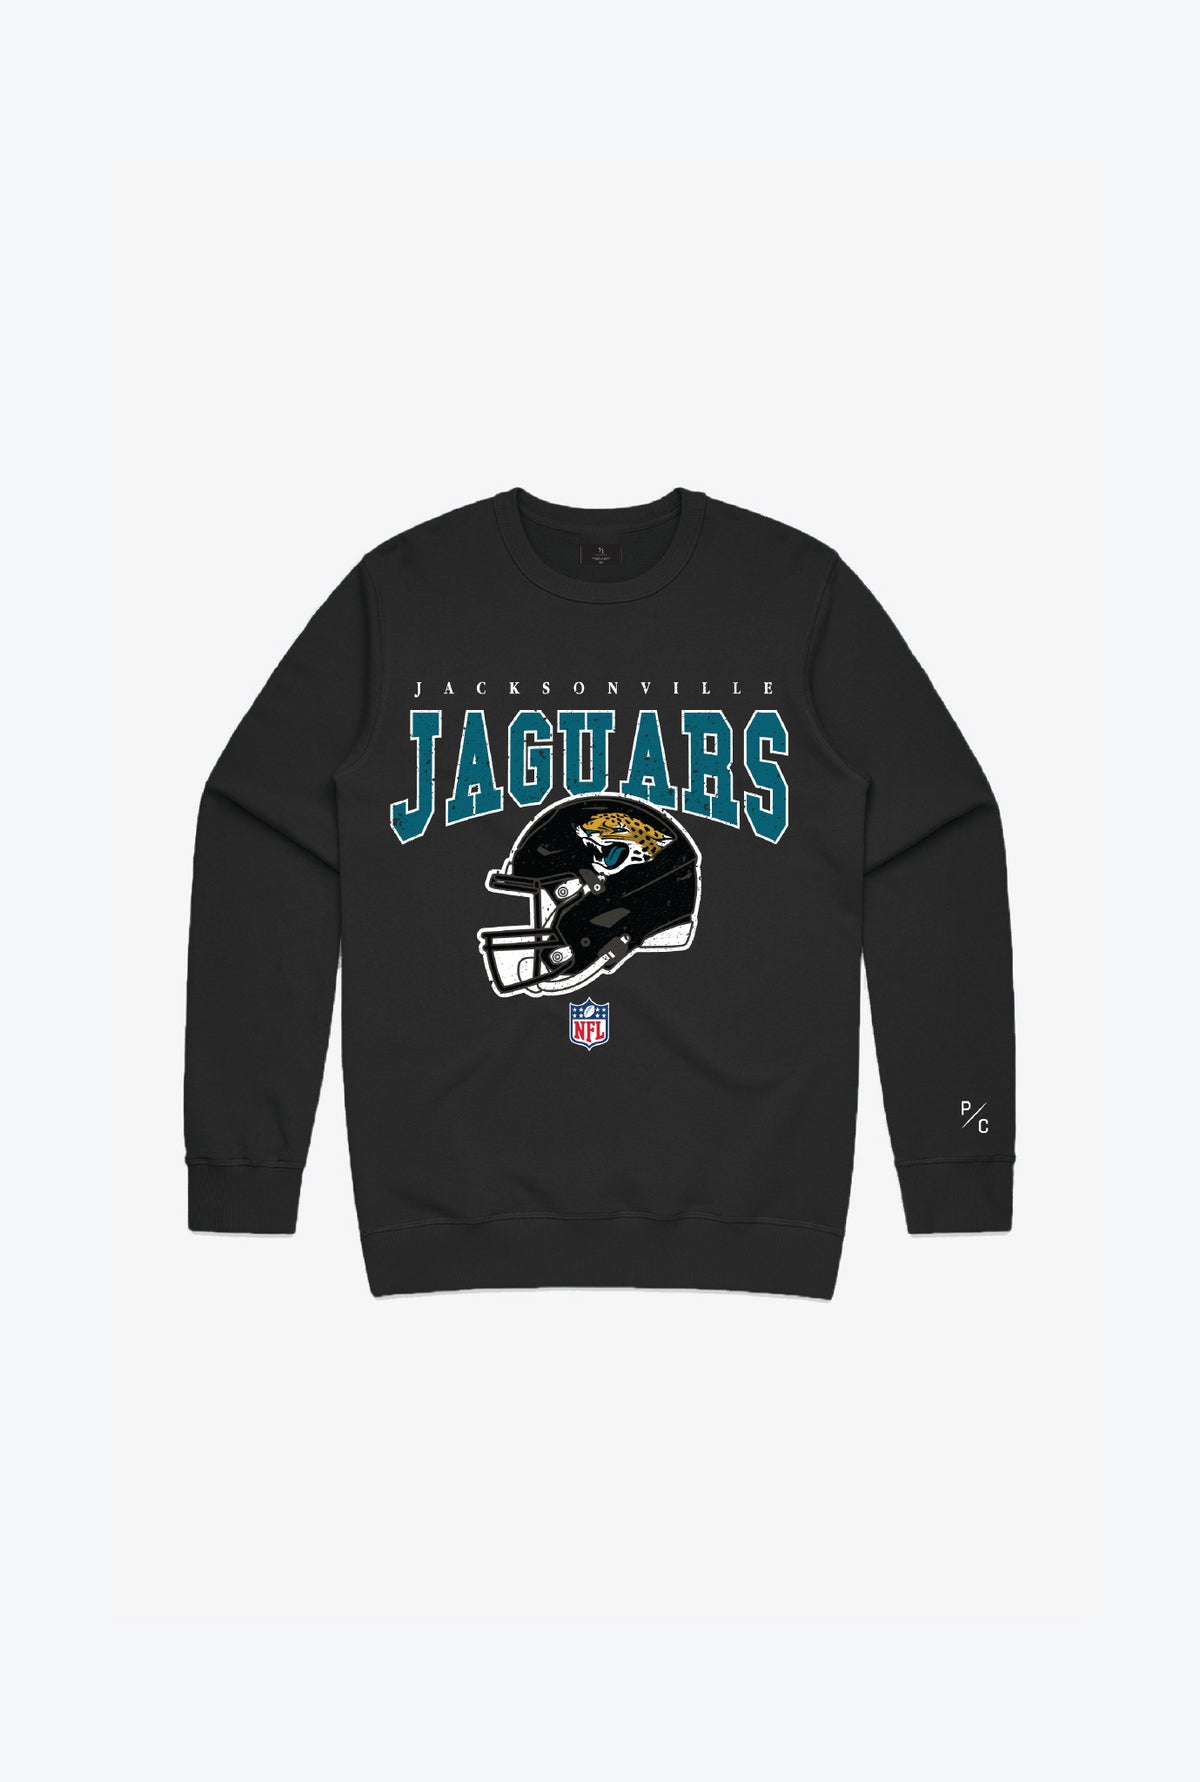 Jacksonville Jaguars Vintage Kids Crewneck - Black